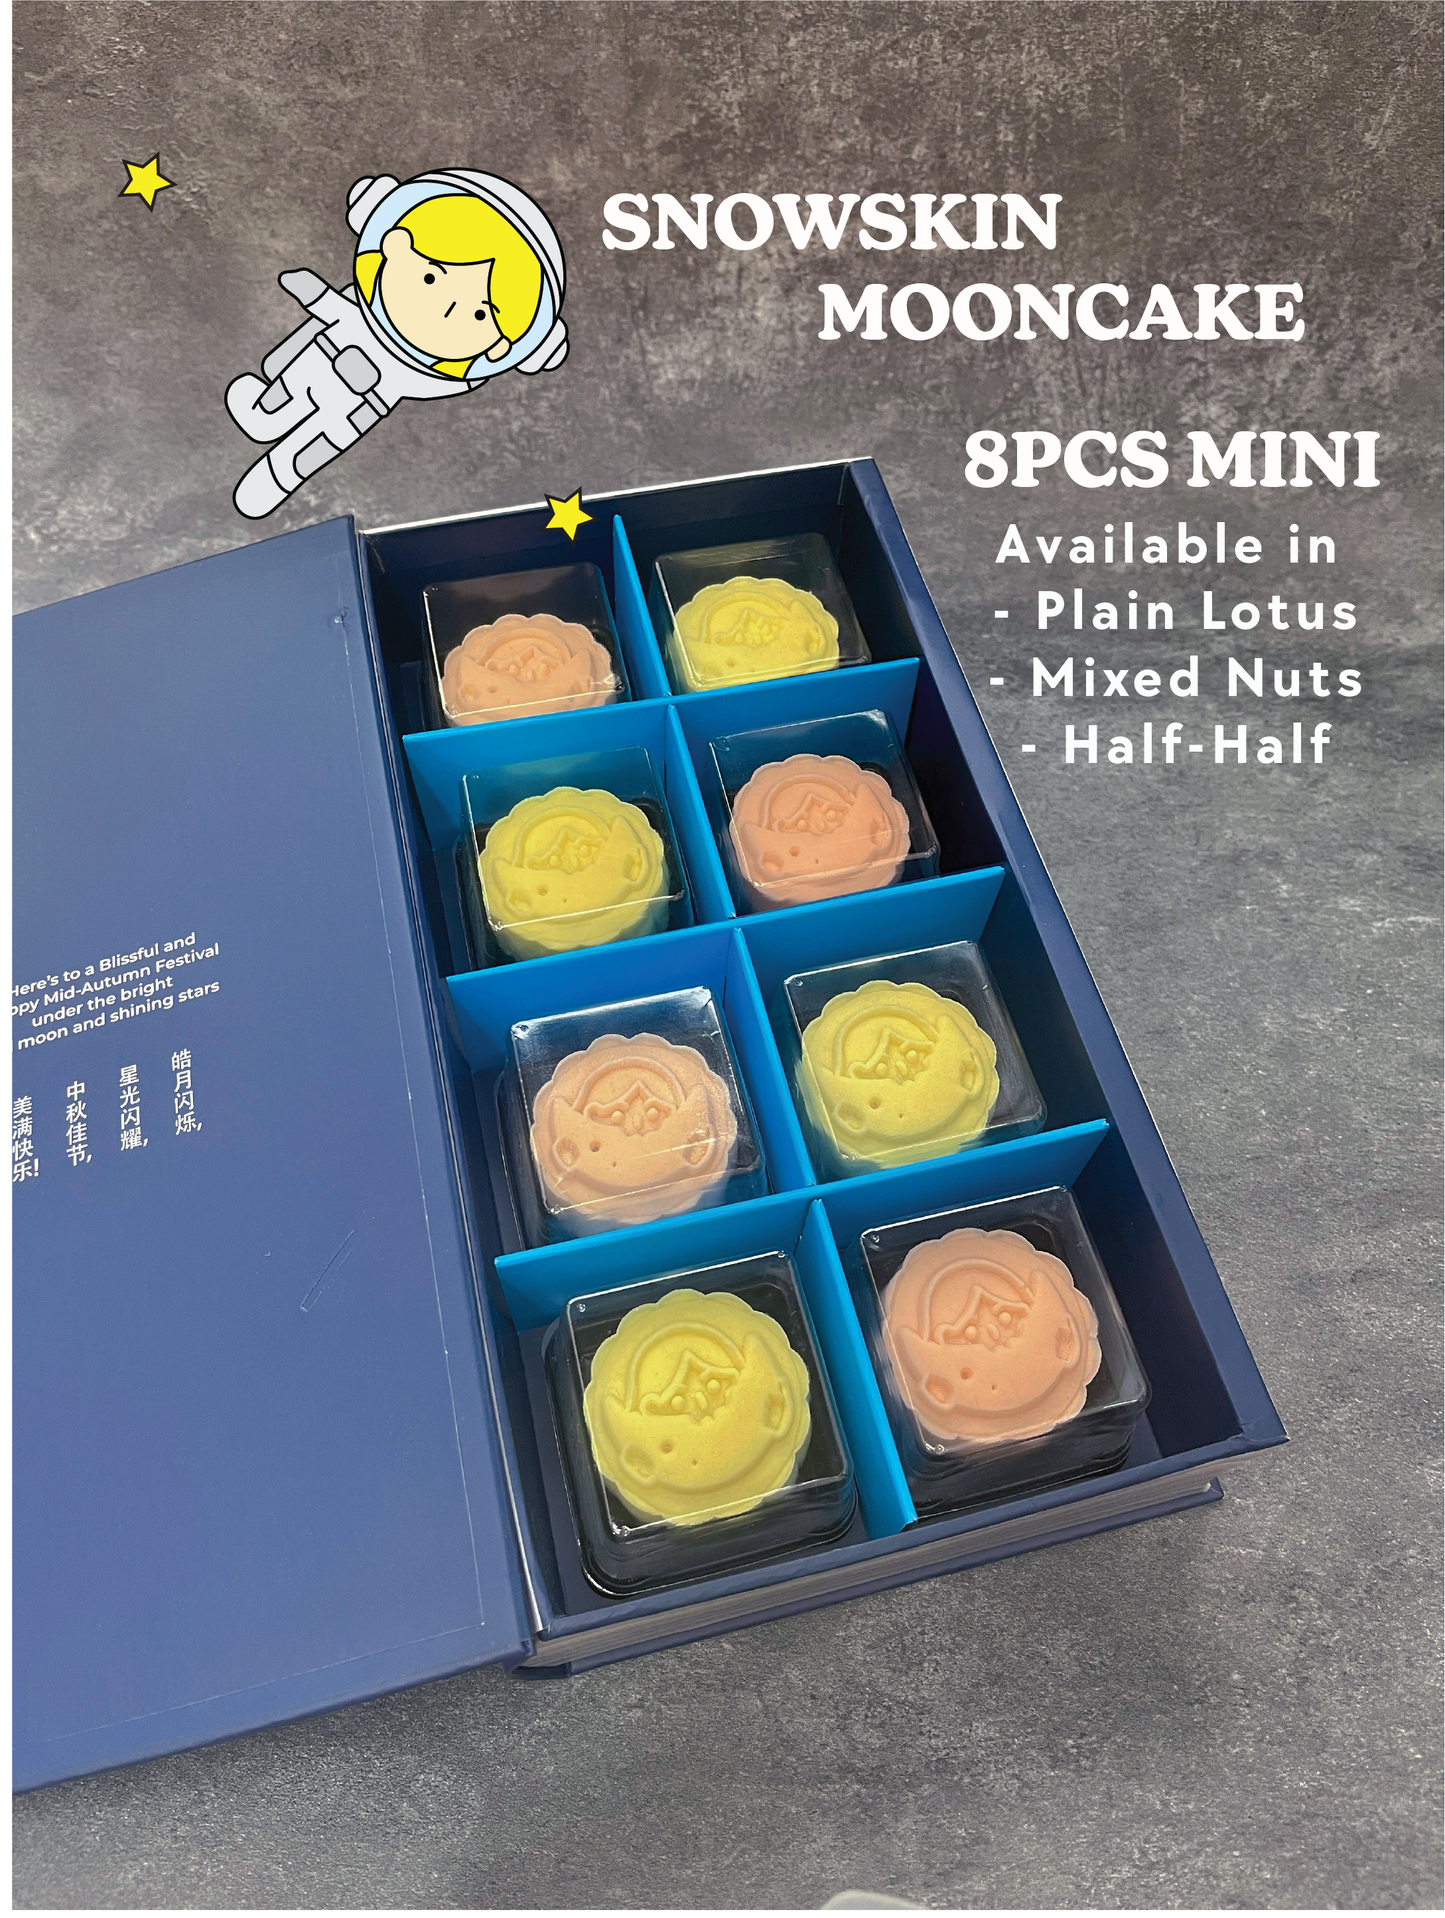 Snowskin Mooncakes